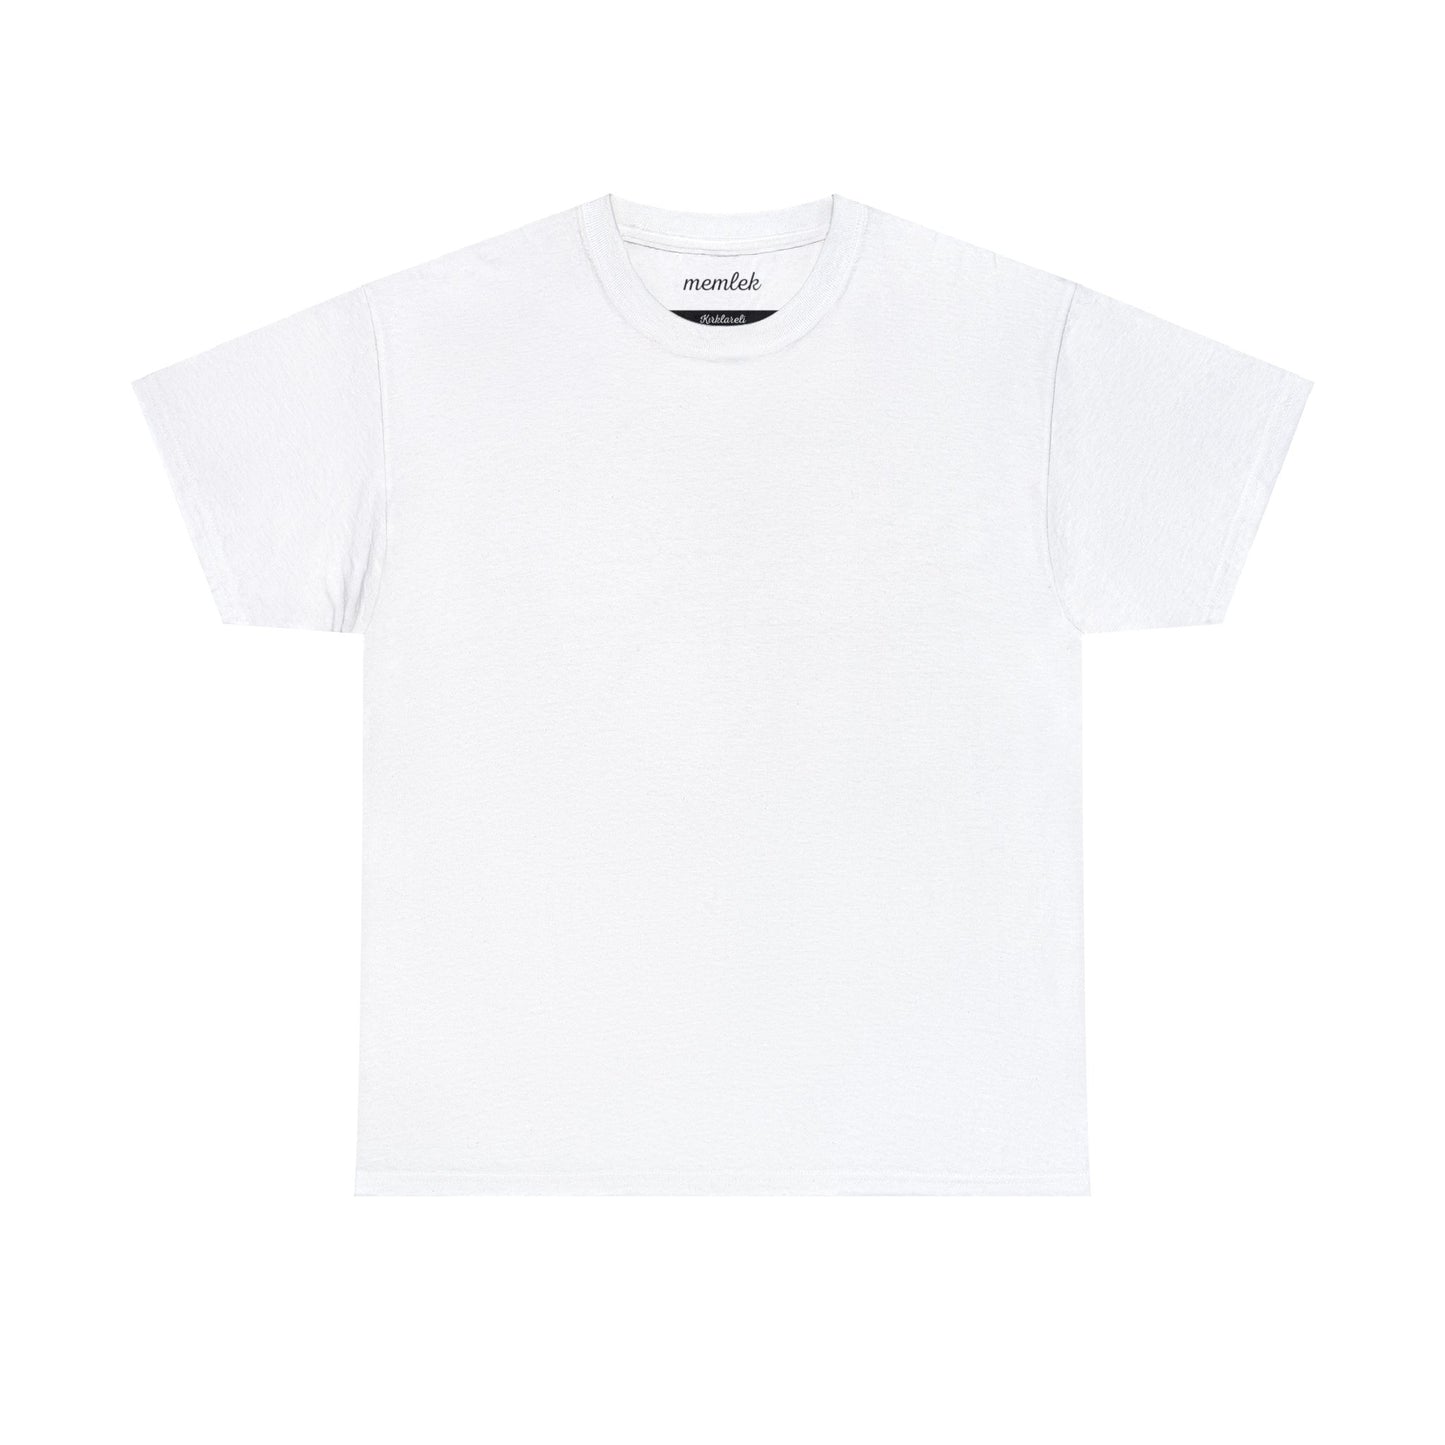 Kurt - 39 Kırklareli - T-Shirt - Back Print - Black/White